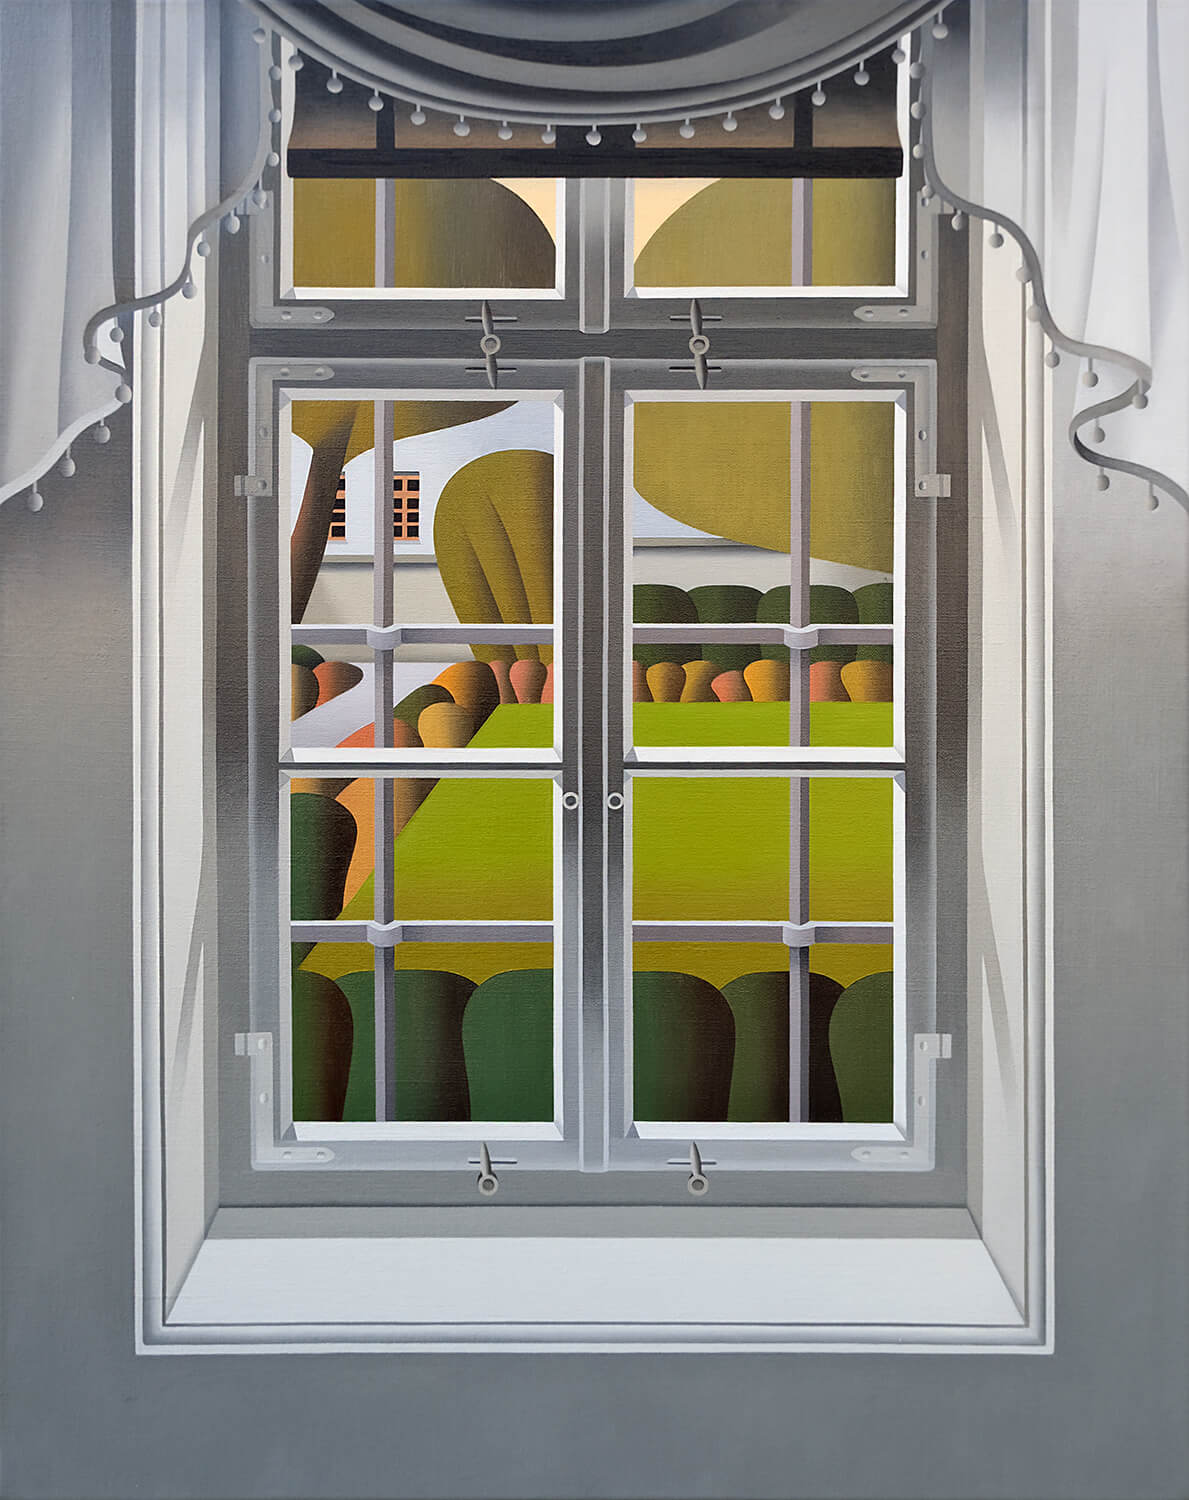 Jan Schüler, Weimar: View from Goethe's residence into the garden, 2022, oil on canvas, 100 x 80 cm